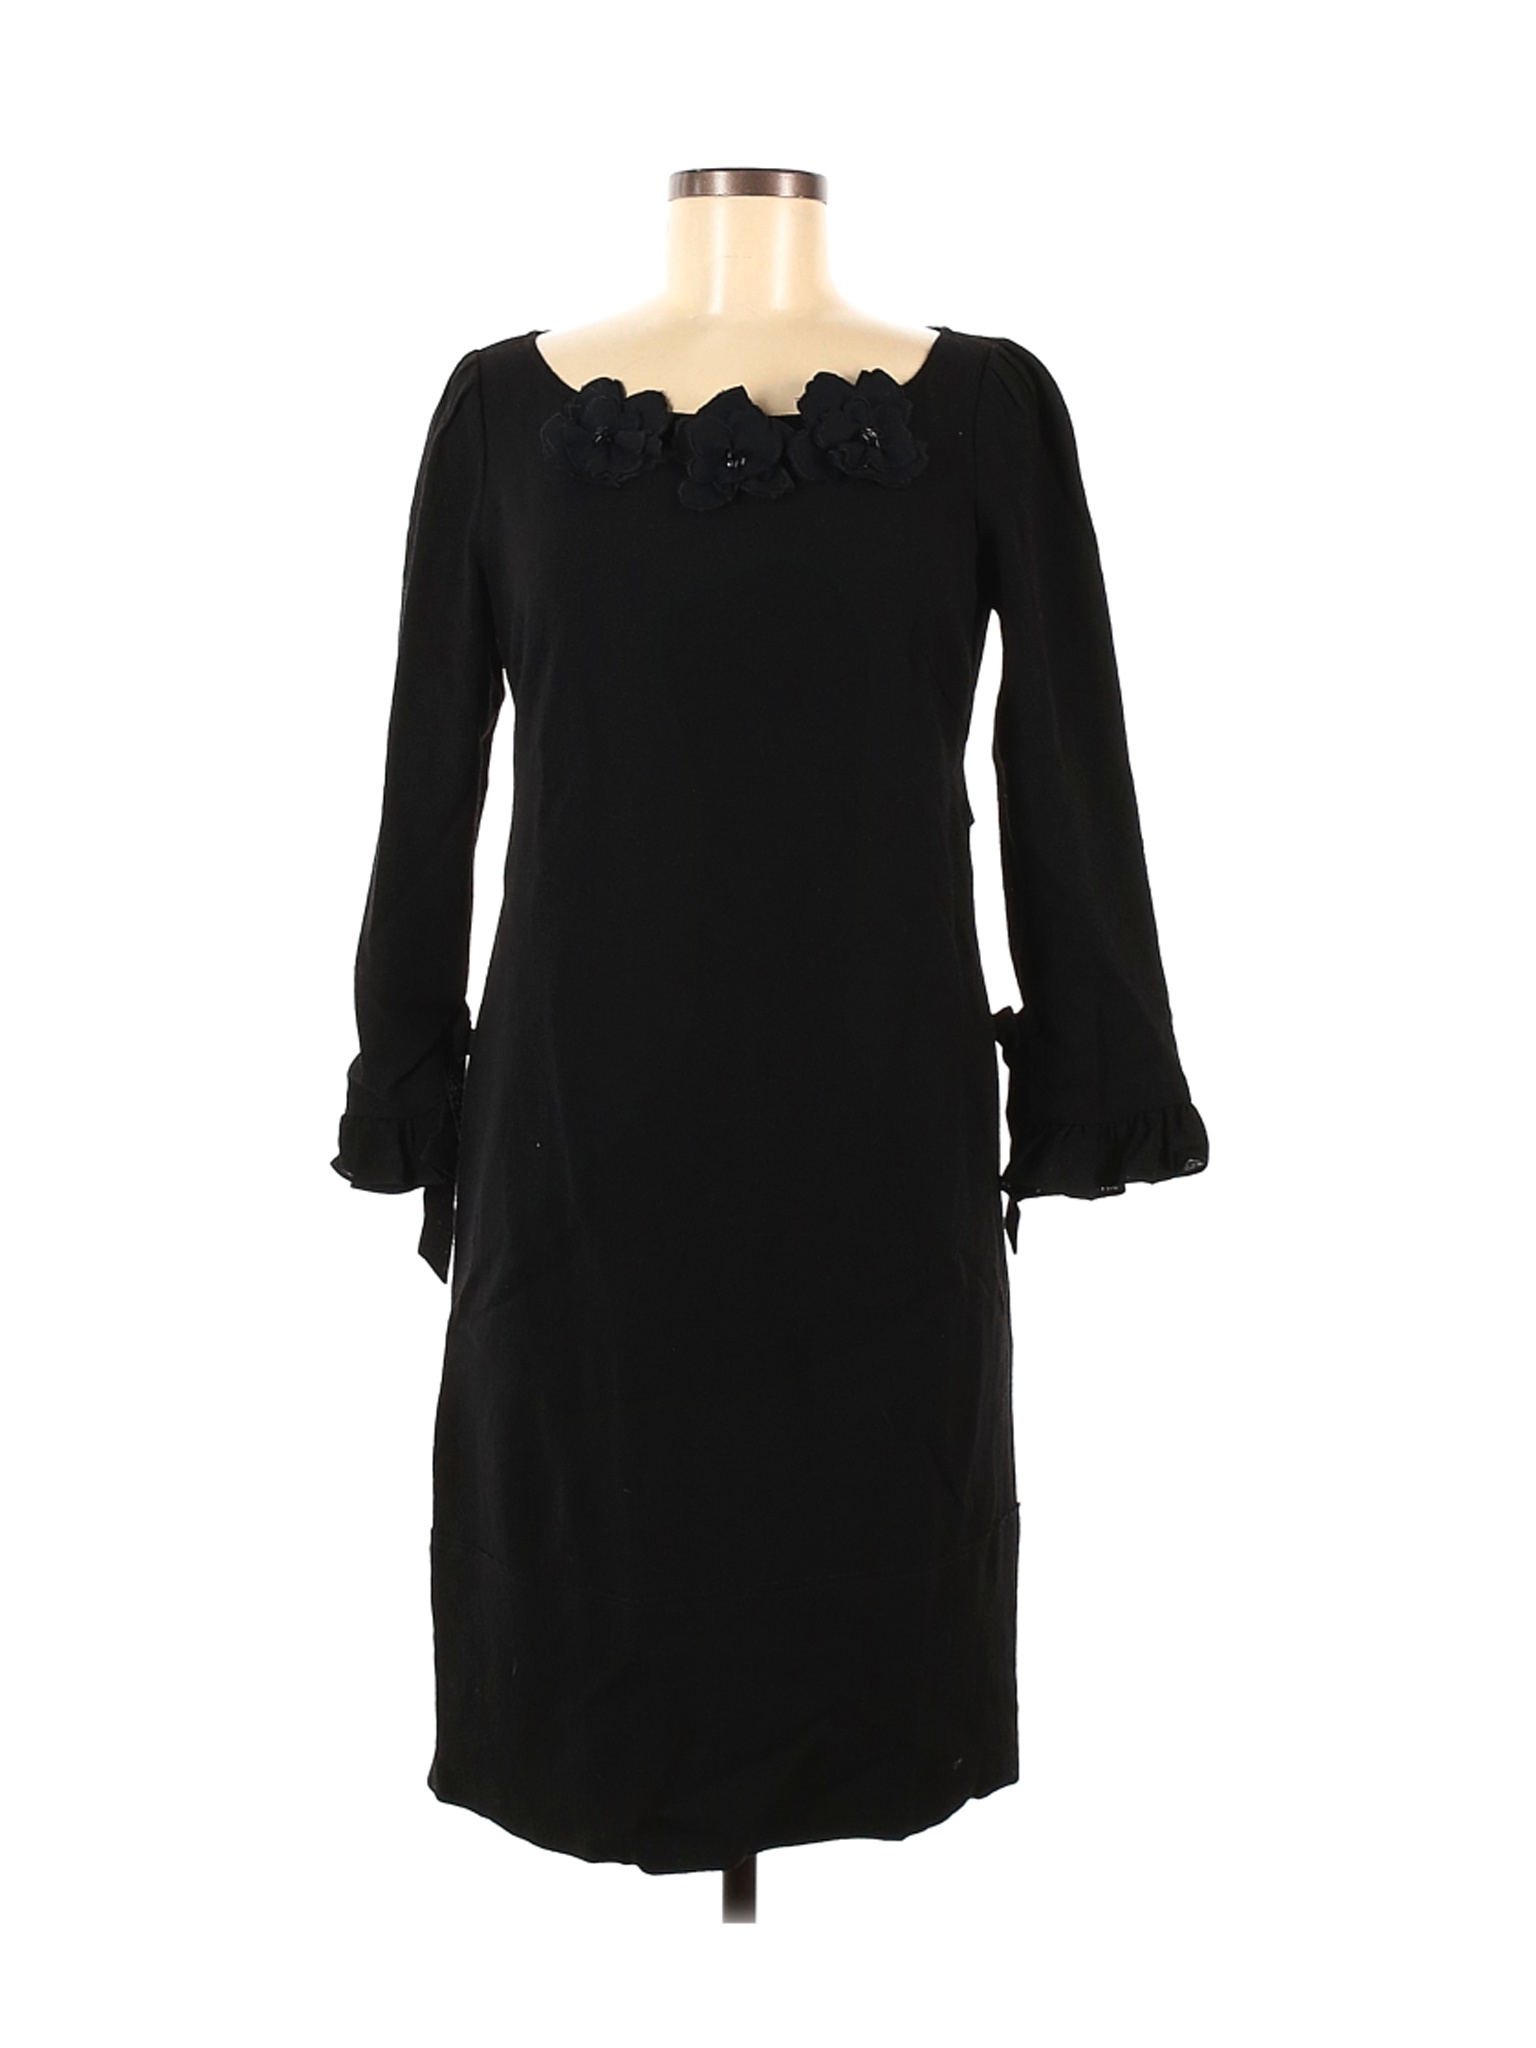 Vera Wang Women Black Cocktail Dress 6 | eBay